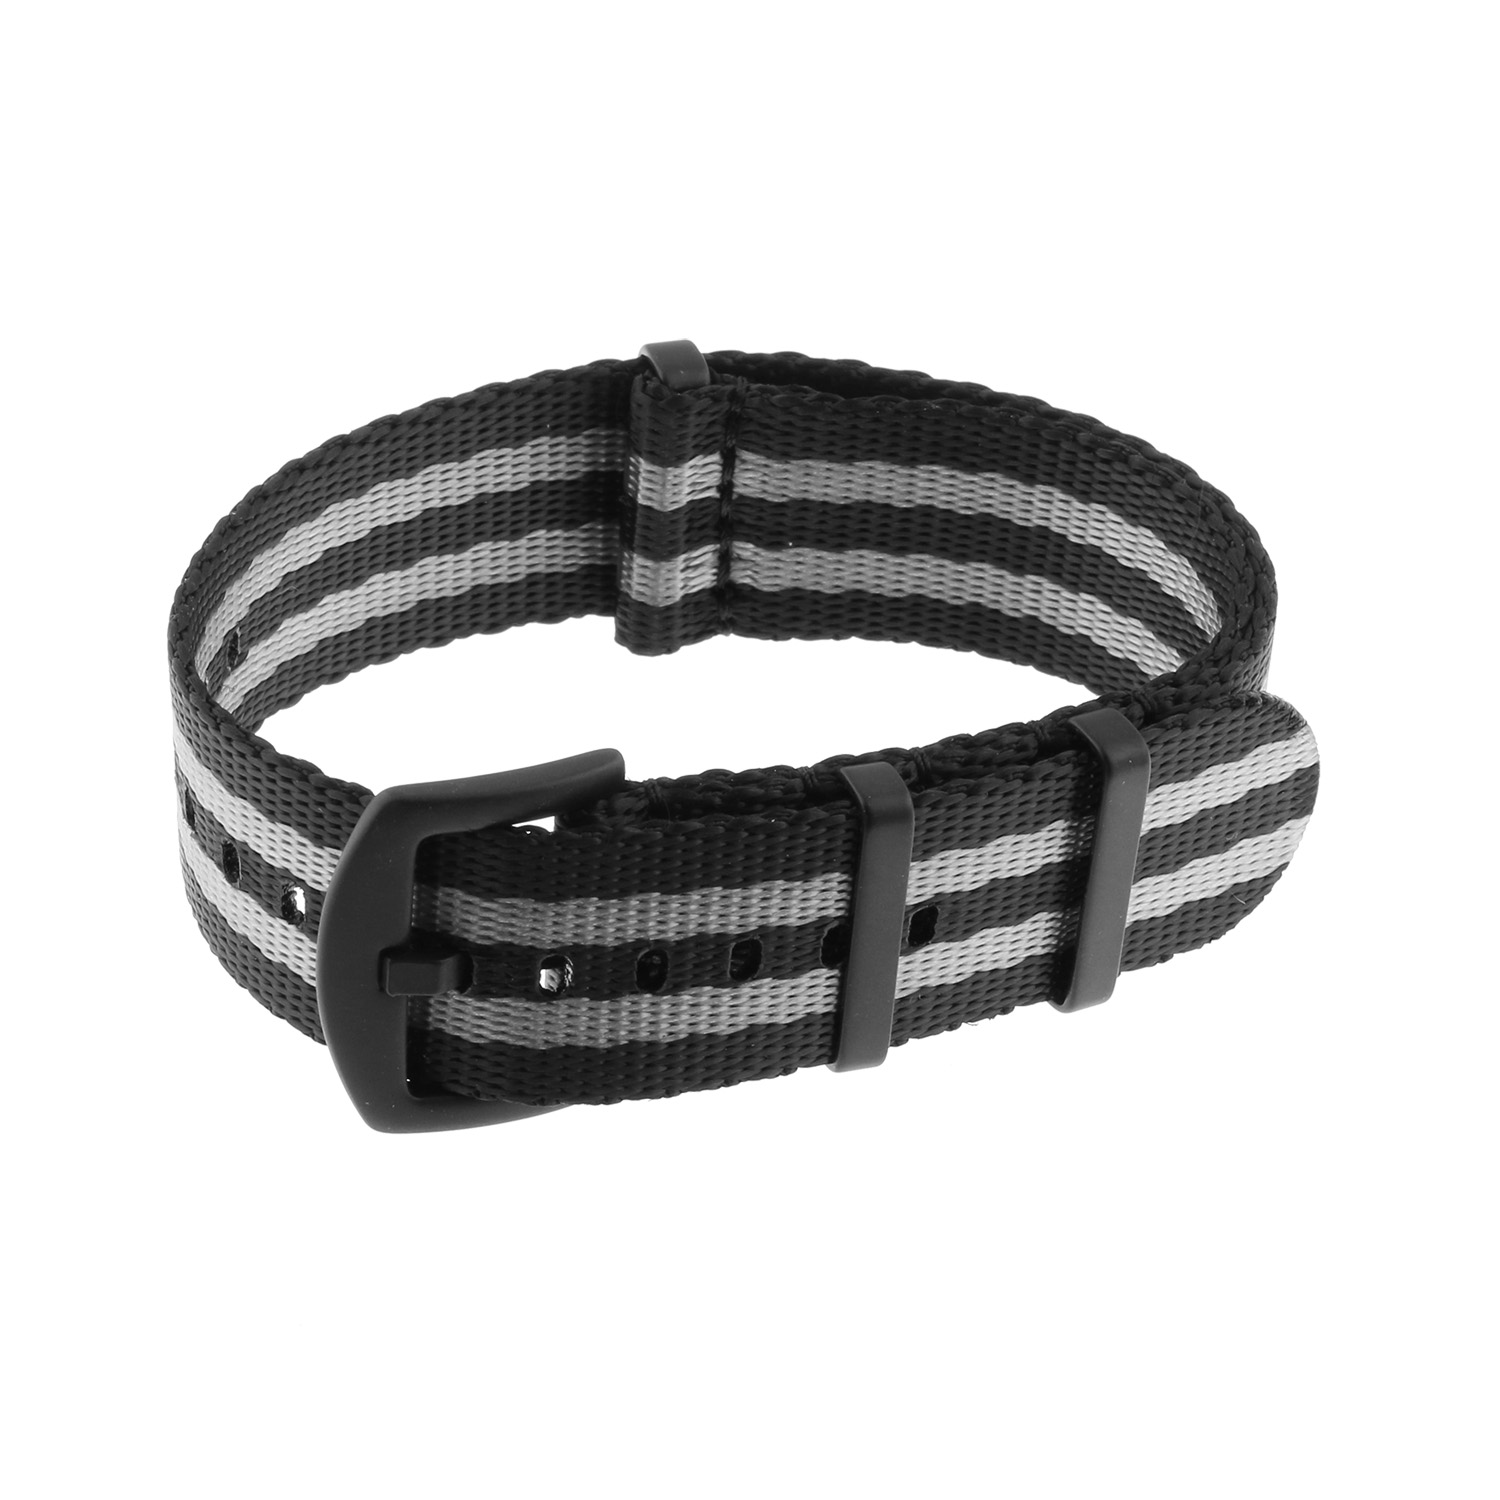 Nt4.nl.1.7.mb Main Black & Grey StrapsCo Premium Woven Nylon Seatbelt NATO Watch Band Strap With Black Buckle 18mm 20mm 22mm 24mm